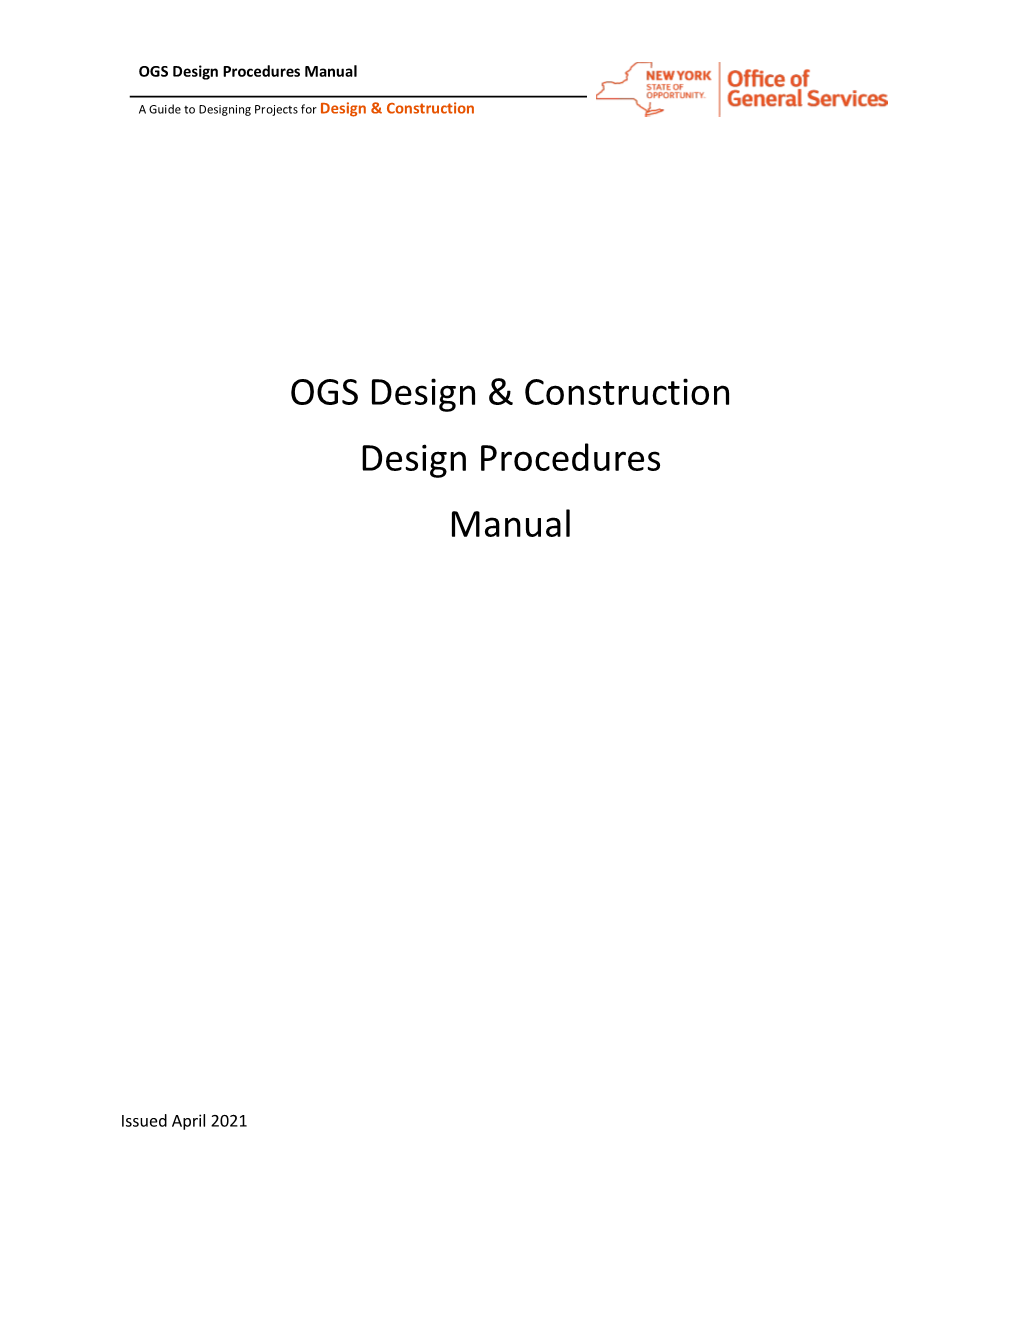 Design Procedures Manual